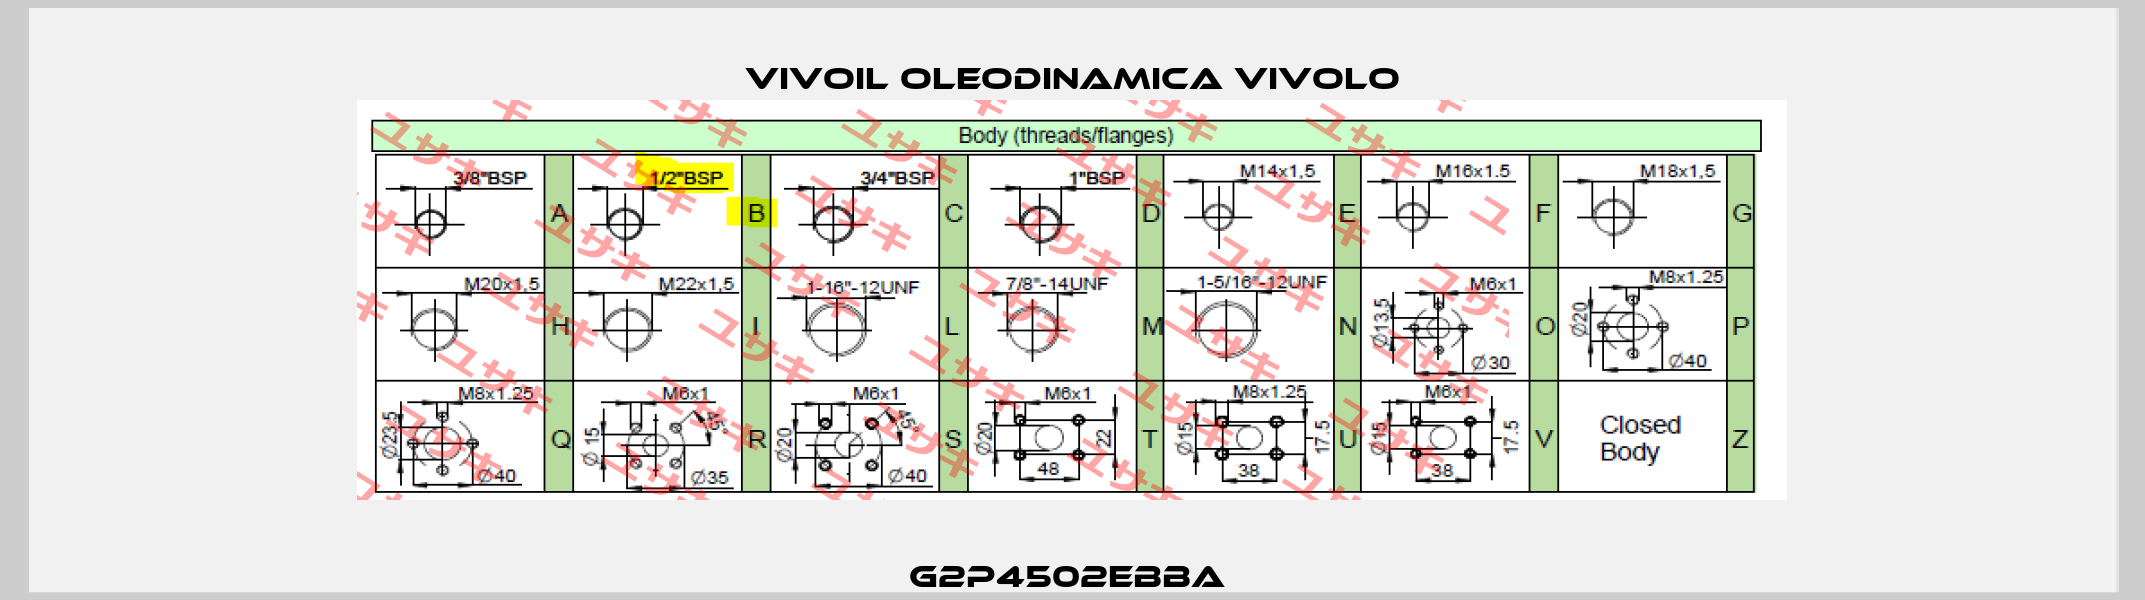 G2P4502EBBA  Vivoil Oleodinamica Vivolo